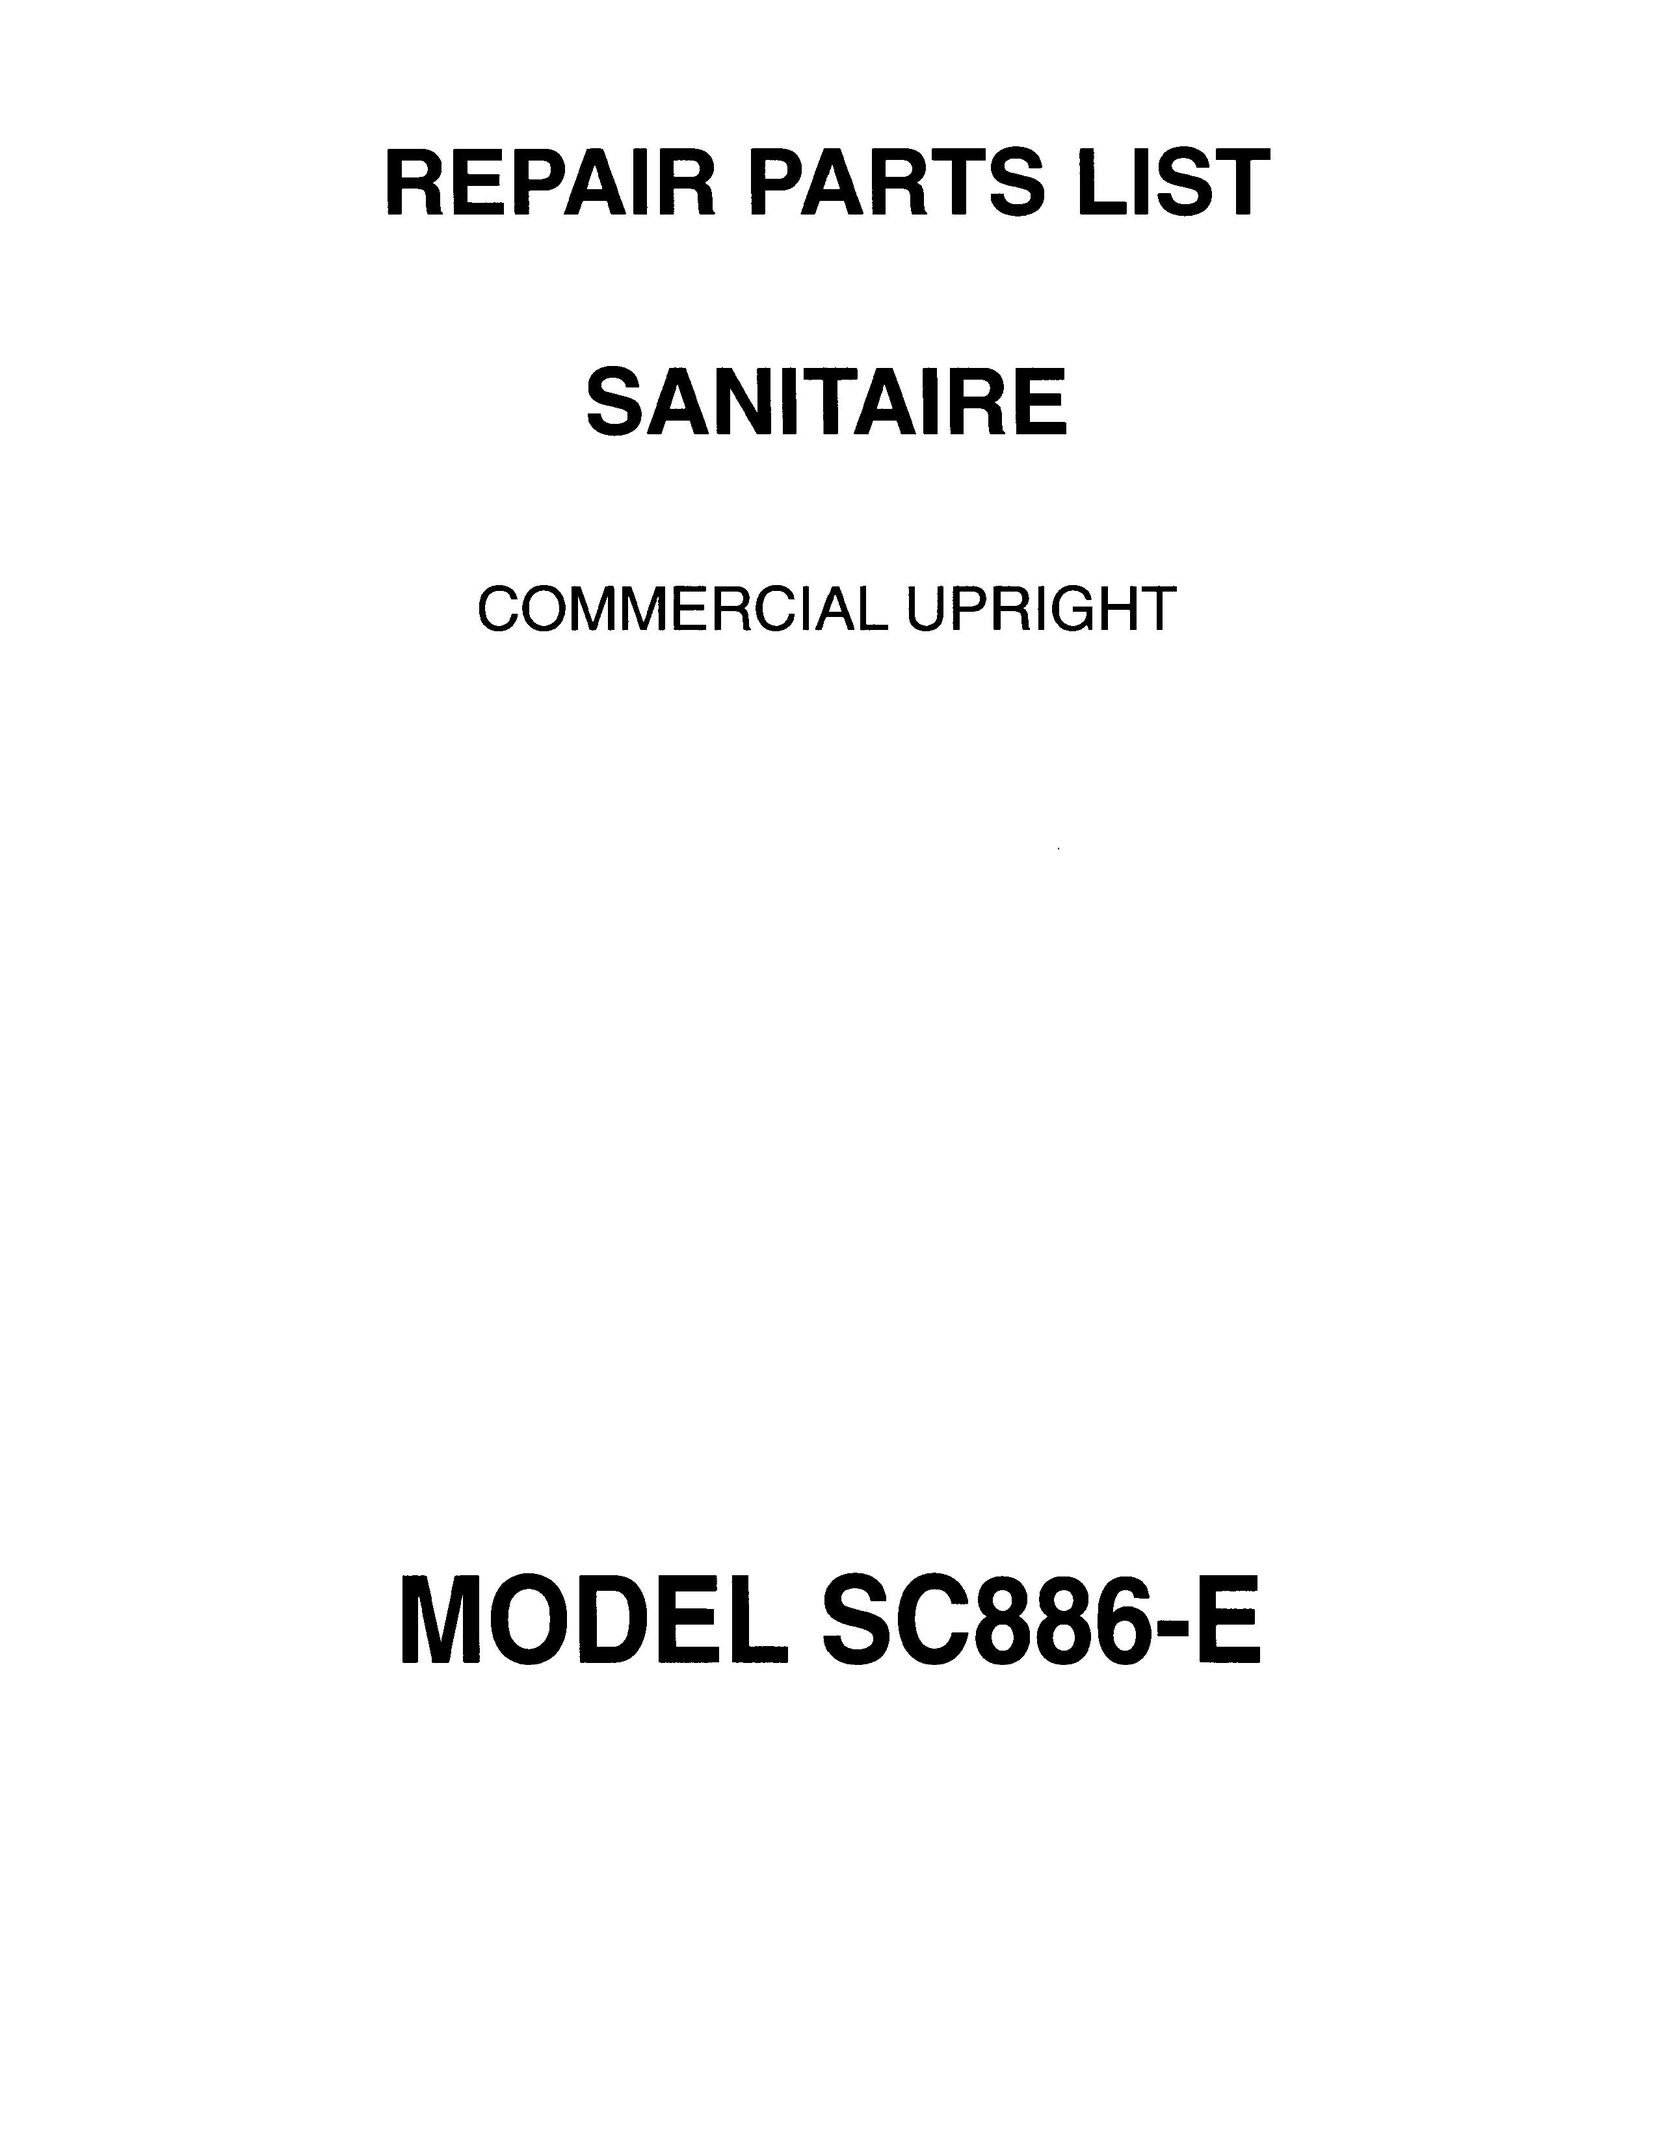 Sanitaire SC886-E Vacuum Cleaner User Manual